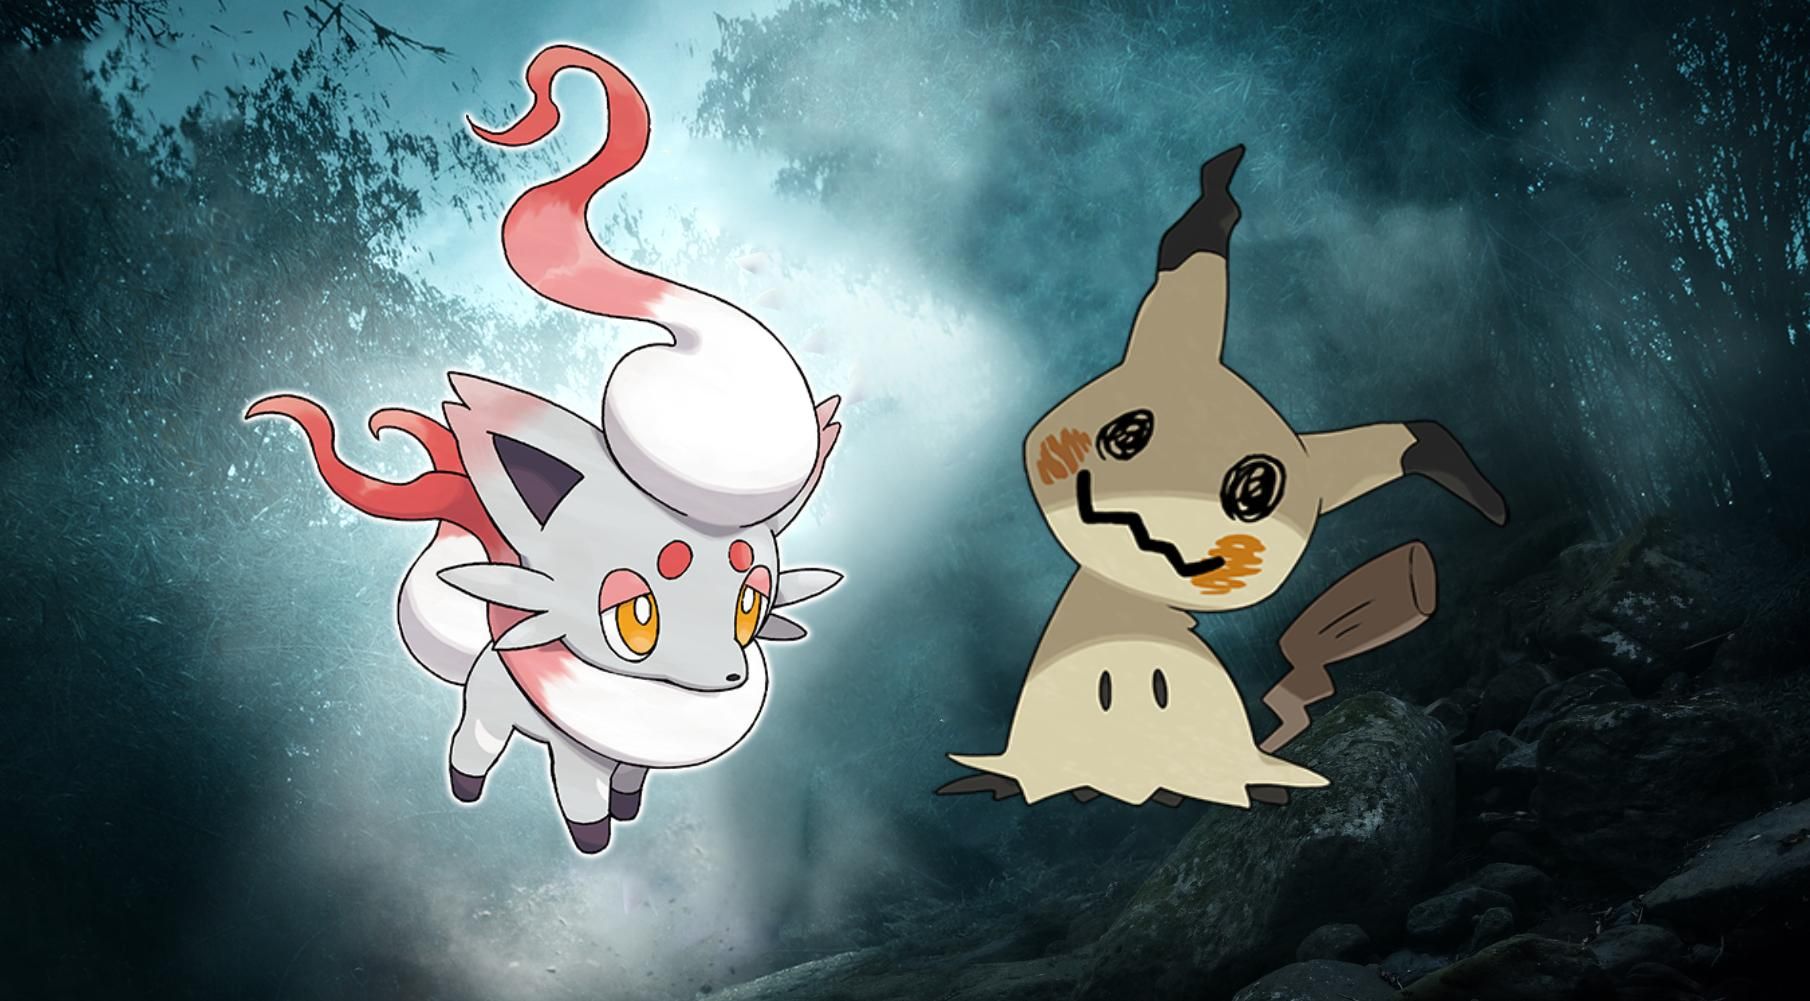 Creep it Real with a Spooky Pokémon Quiz